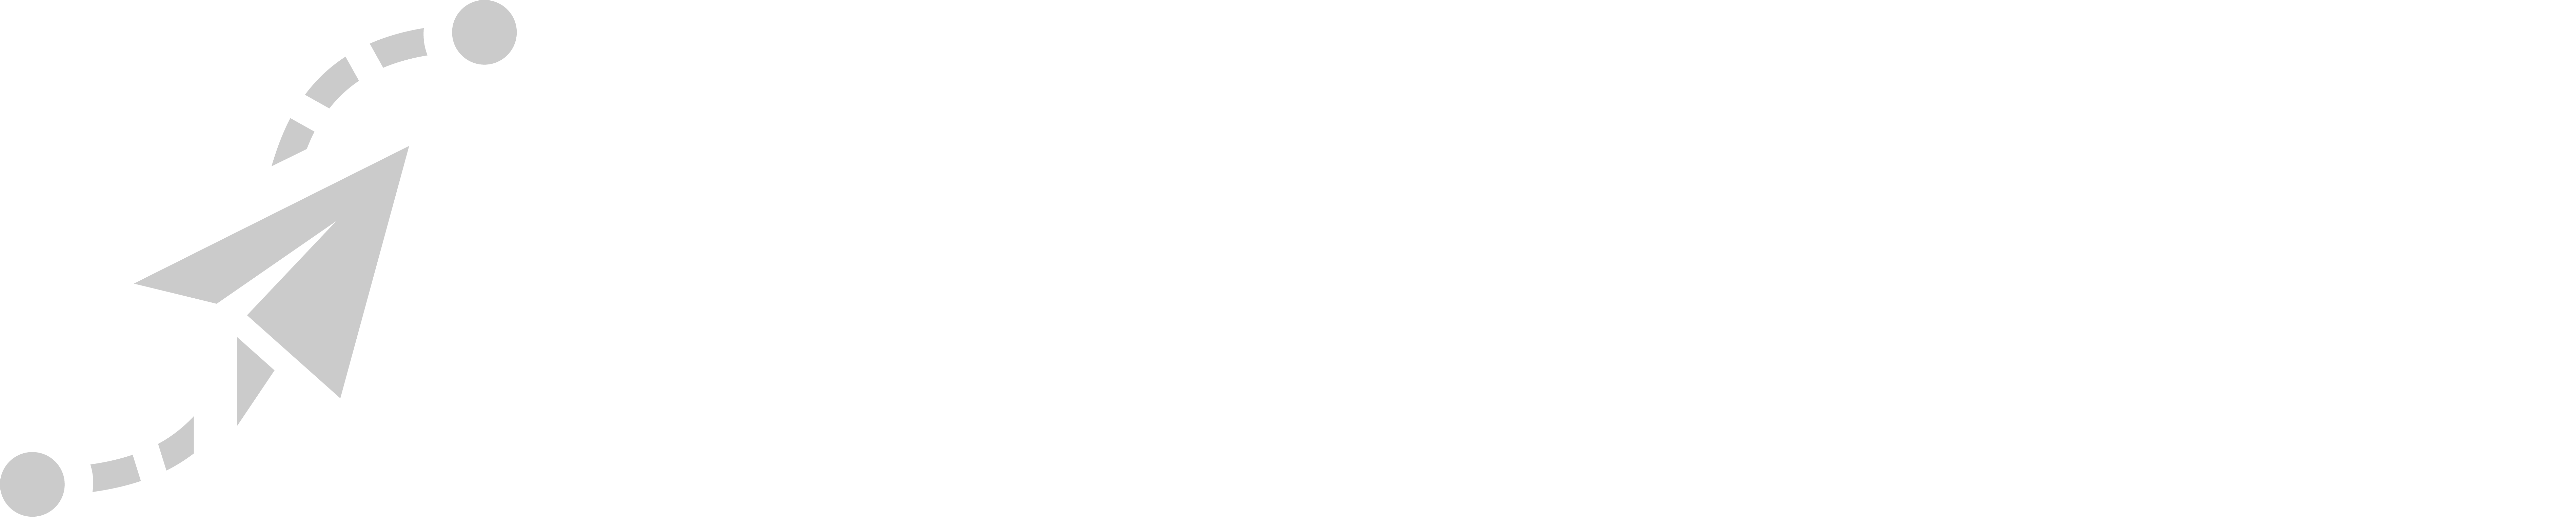 LEITWEG-ID Portal 